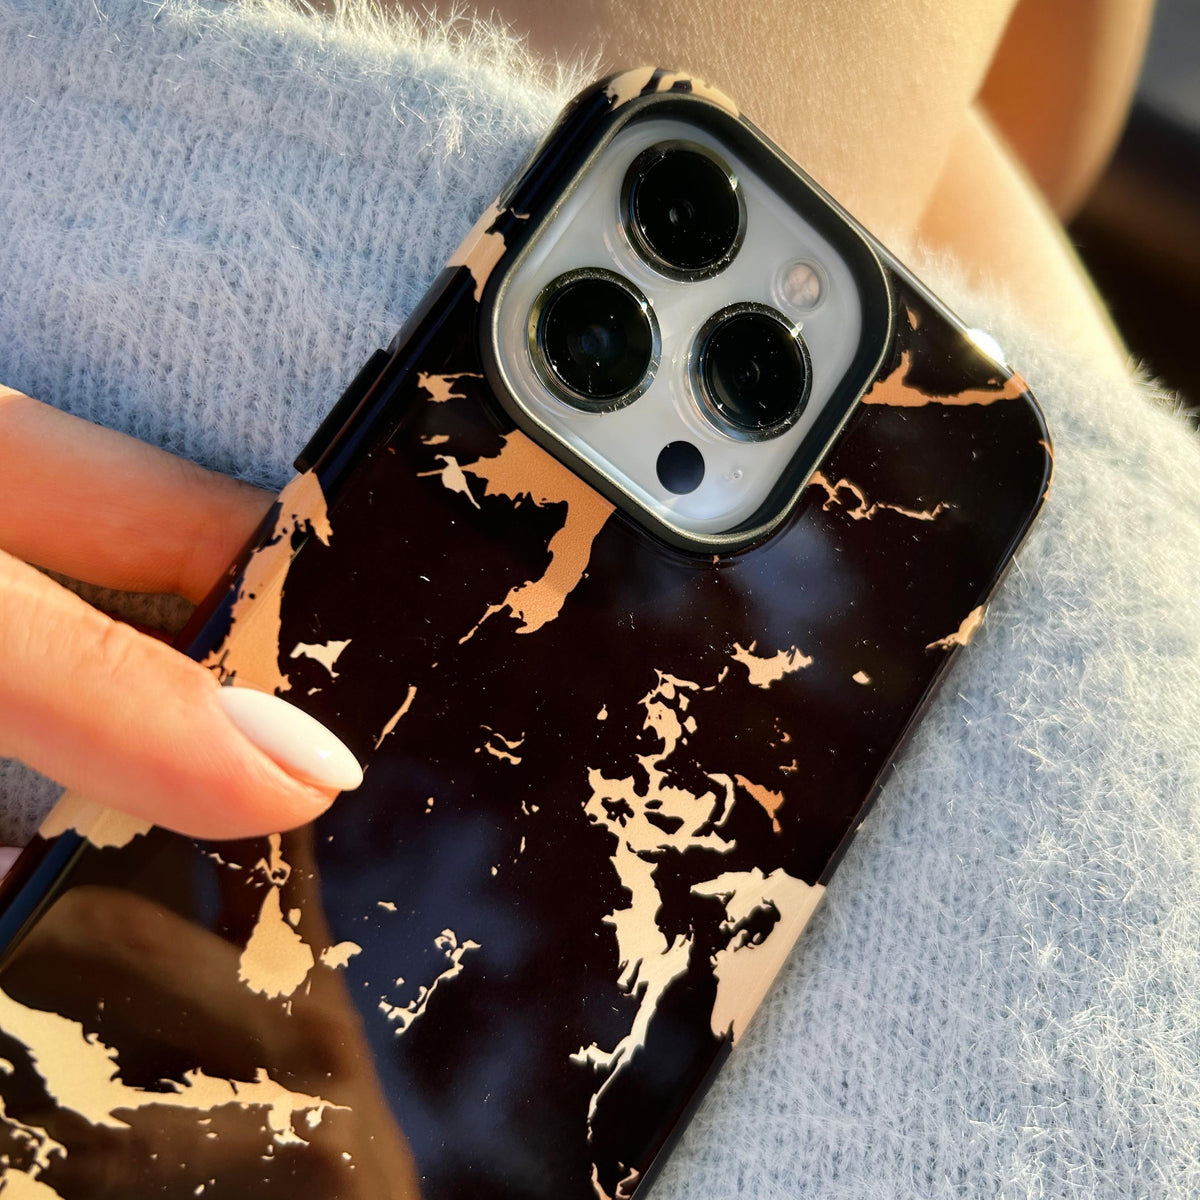 Black Marble iPhone Case - iPhone 11 Pro Max